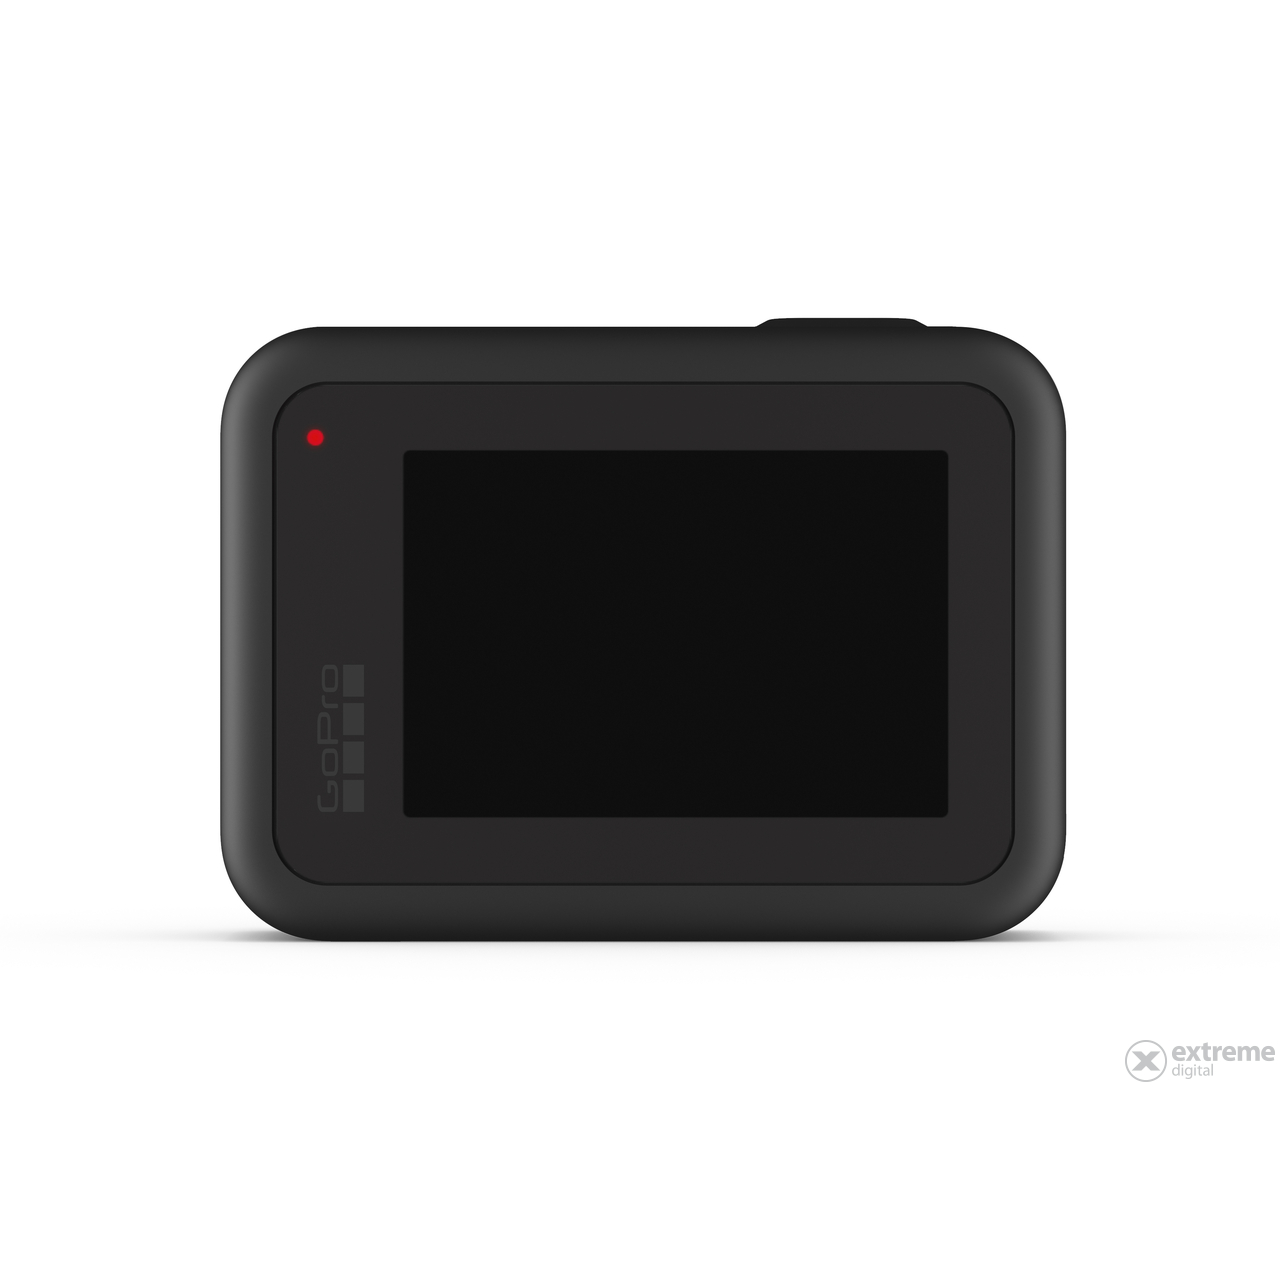 GoPro HERO8 Black sportkamera webkamera funkcióval